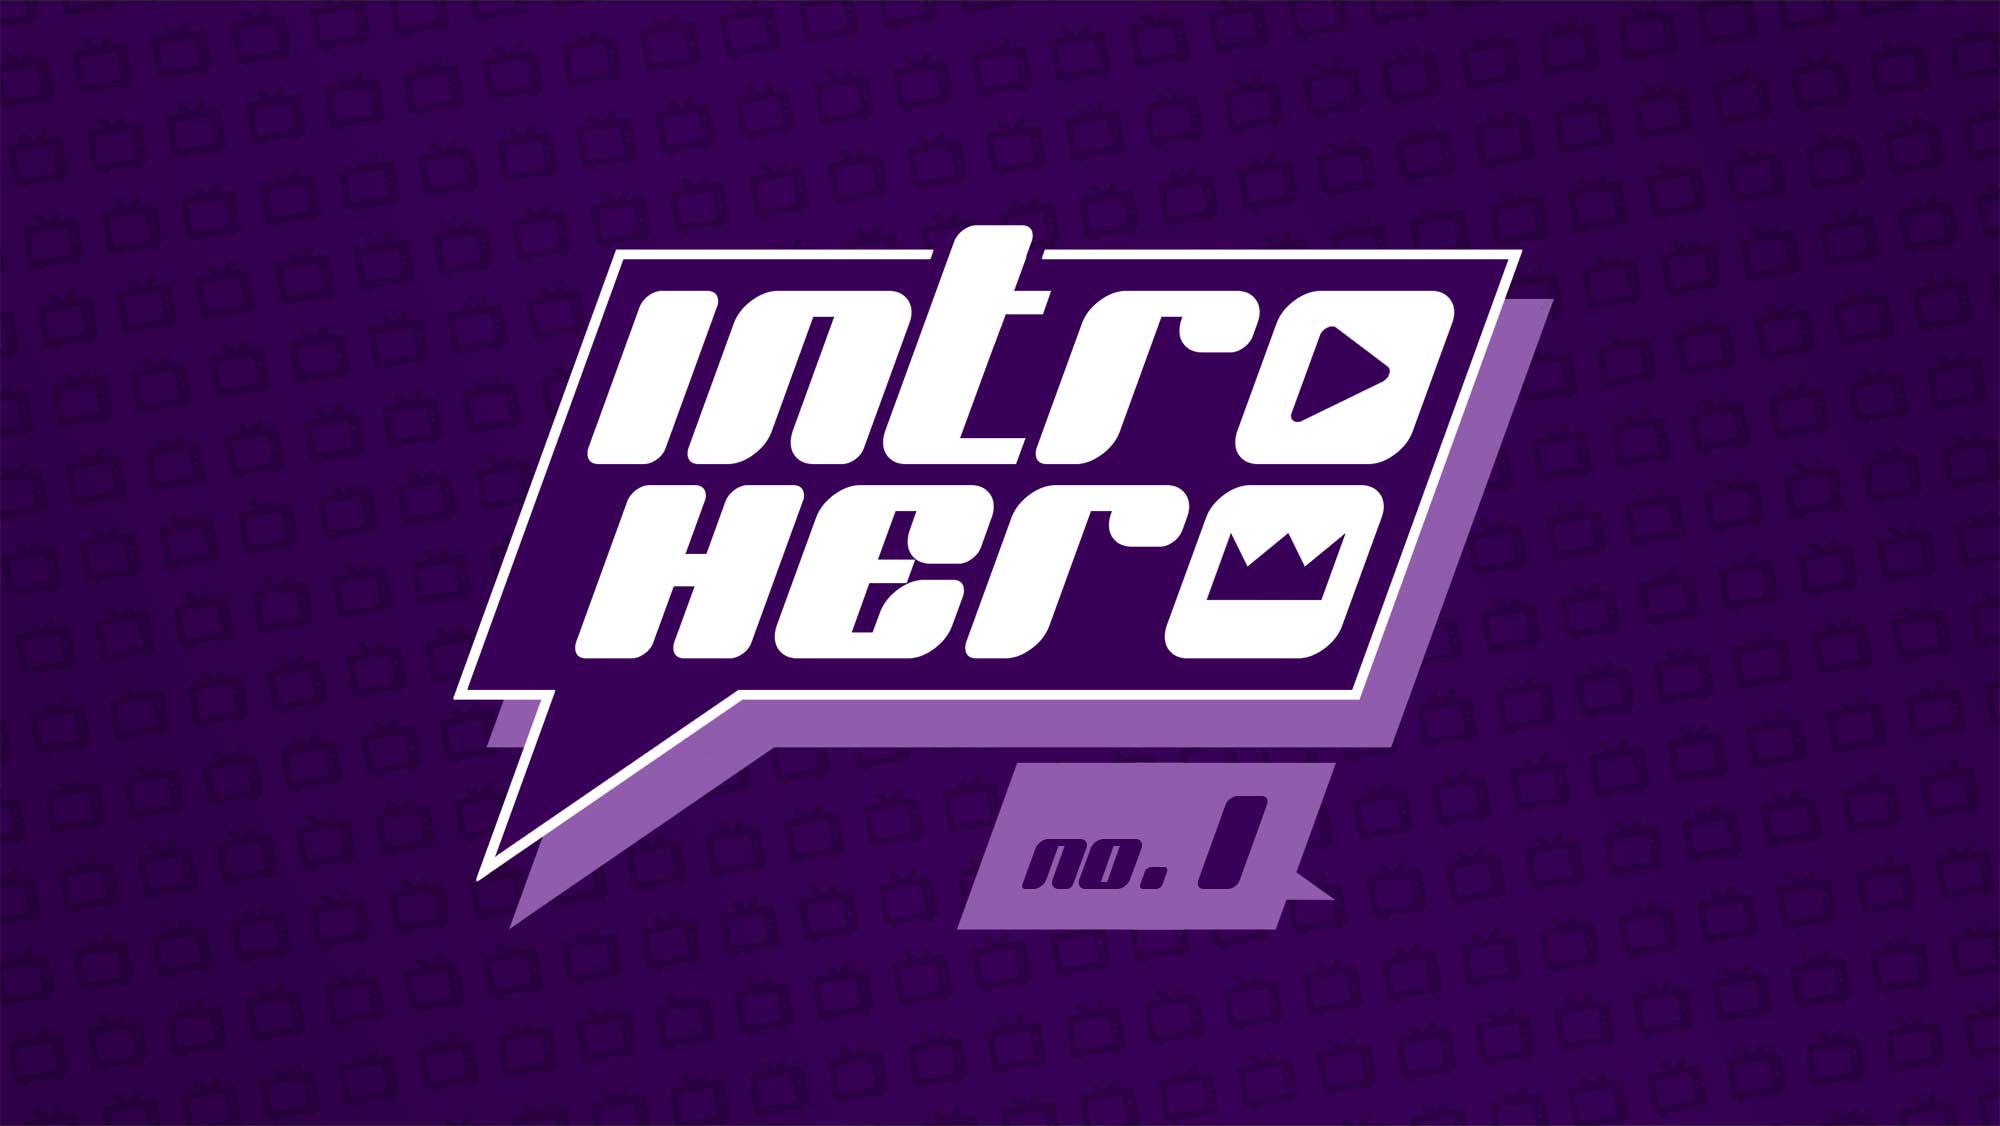 Serien-Intros in Worten beschrieben zum Mitraten: "INTRO HERO" INTRO-HERO_01-Thumb 